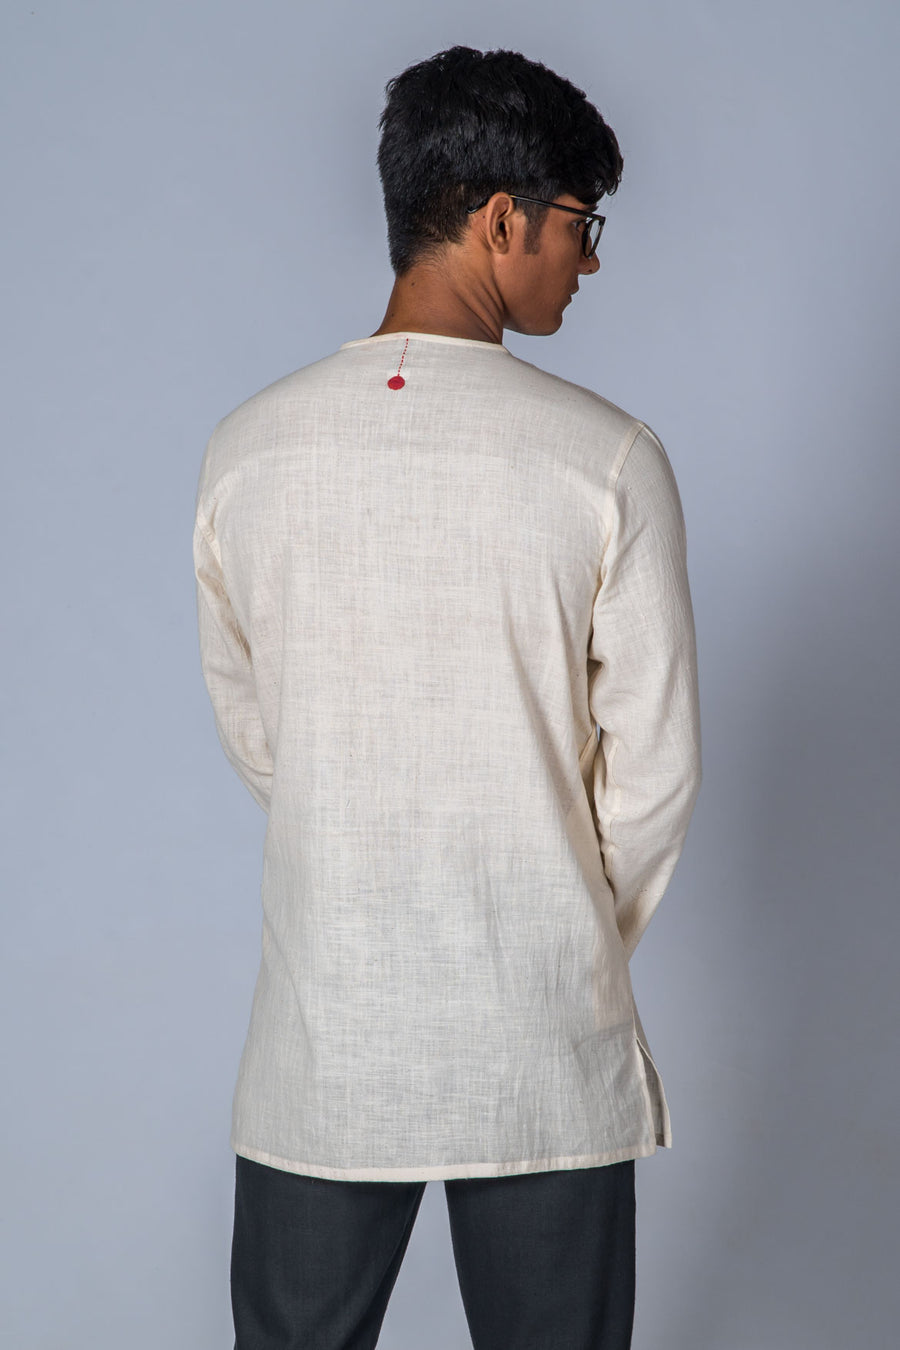 Off-White Handwoven Kurta with Pockets - HEM - Upasana Design Studio